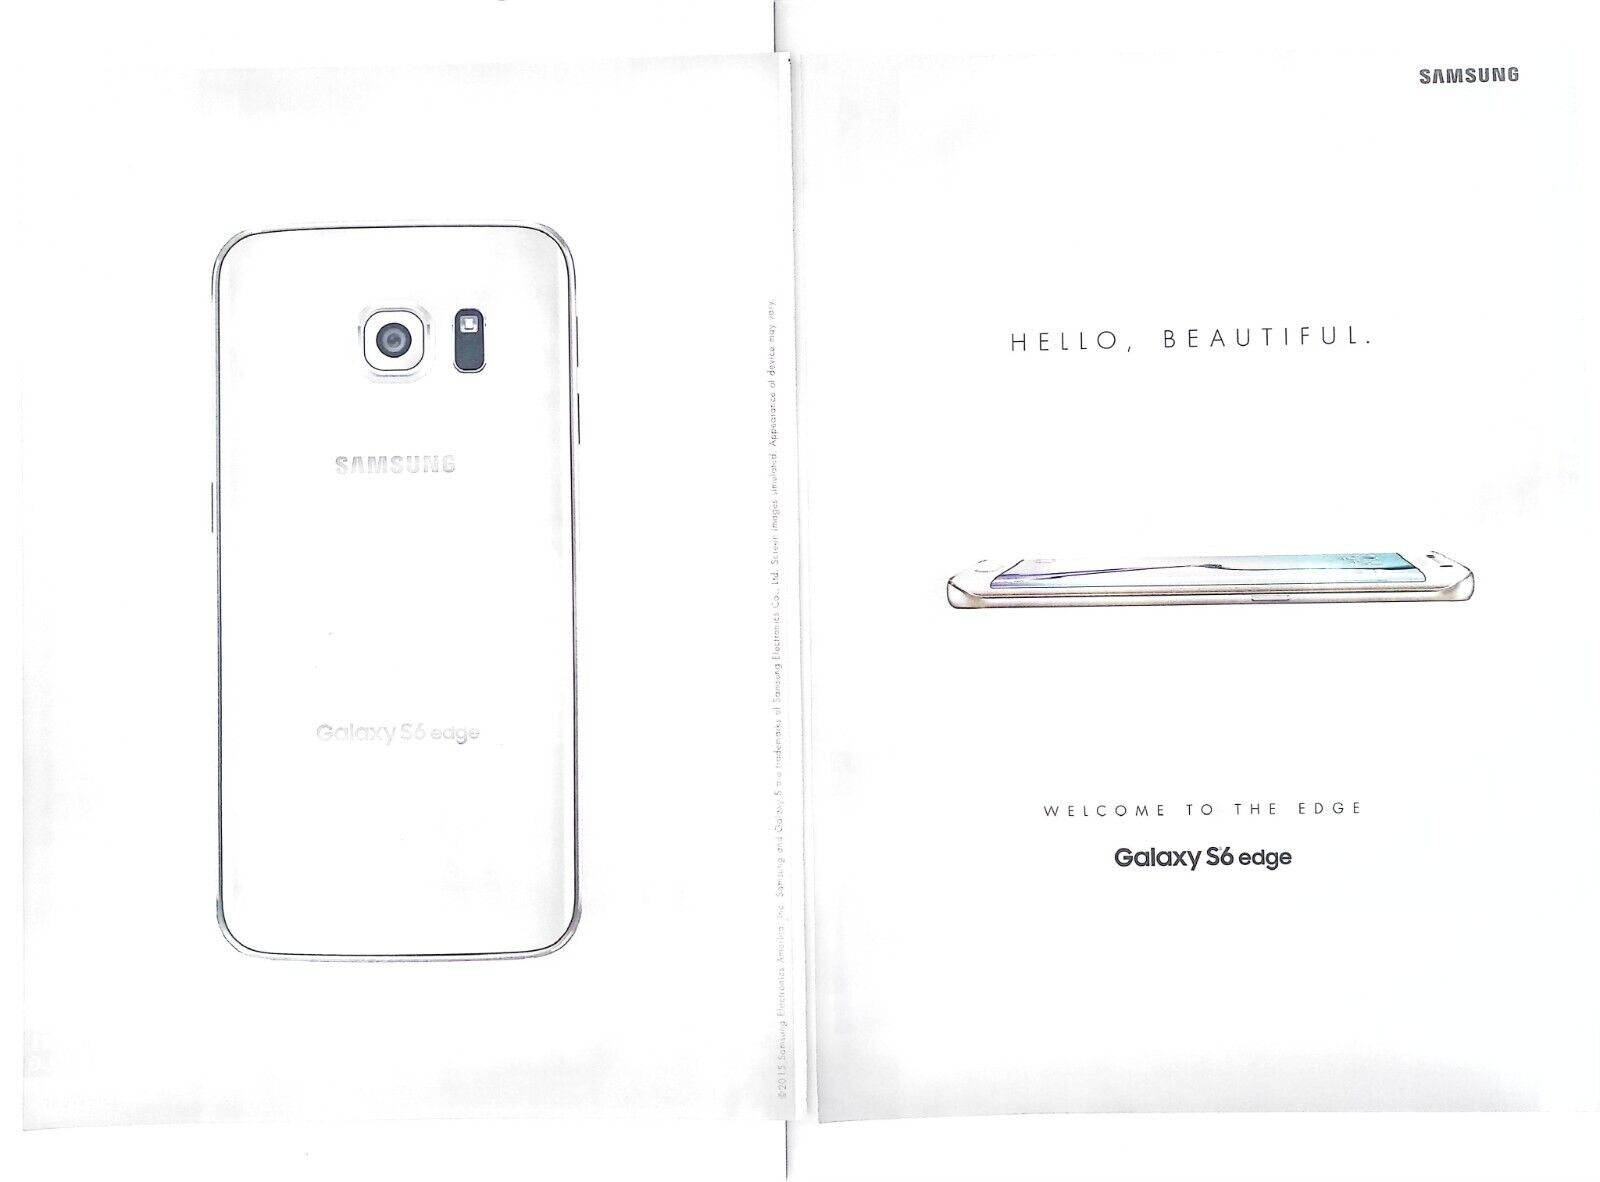 Samsung Galaxy S6 Edge Phone Advertising Print Ad Vogue Magazine June 2015